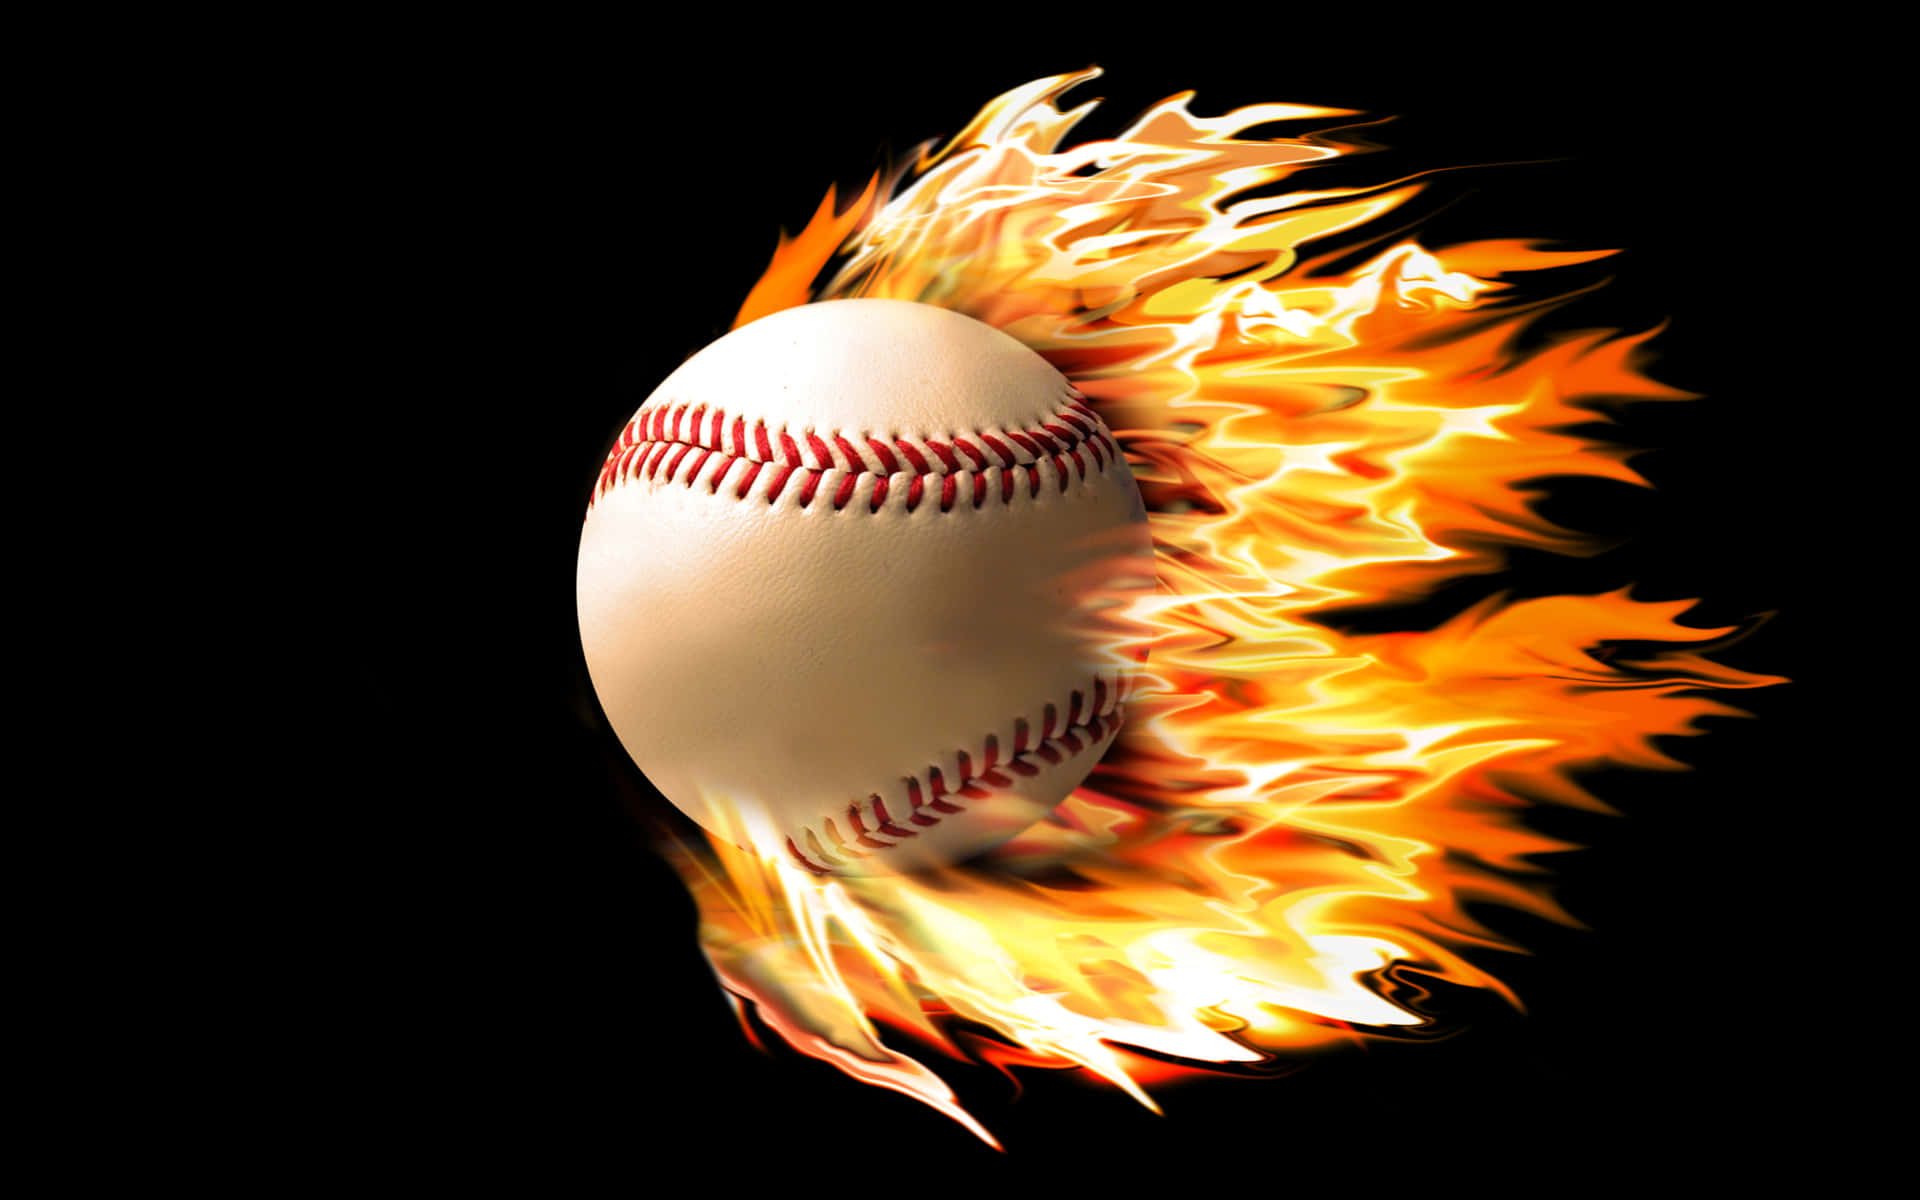 Intense Baseball Action Under Dramatic Lights